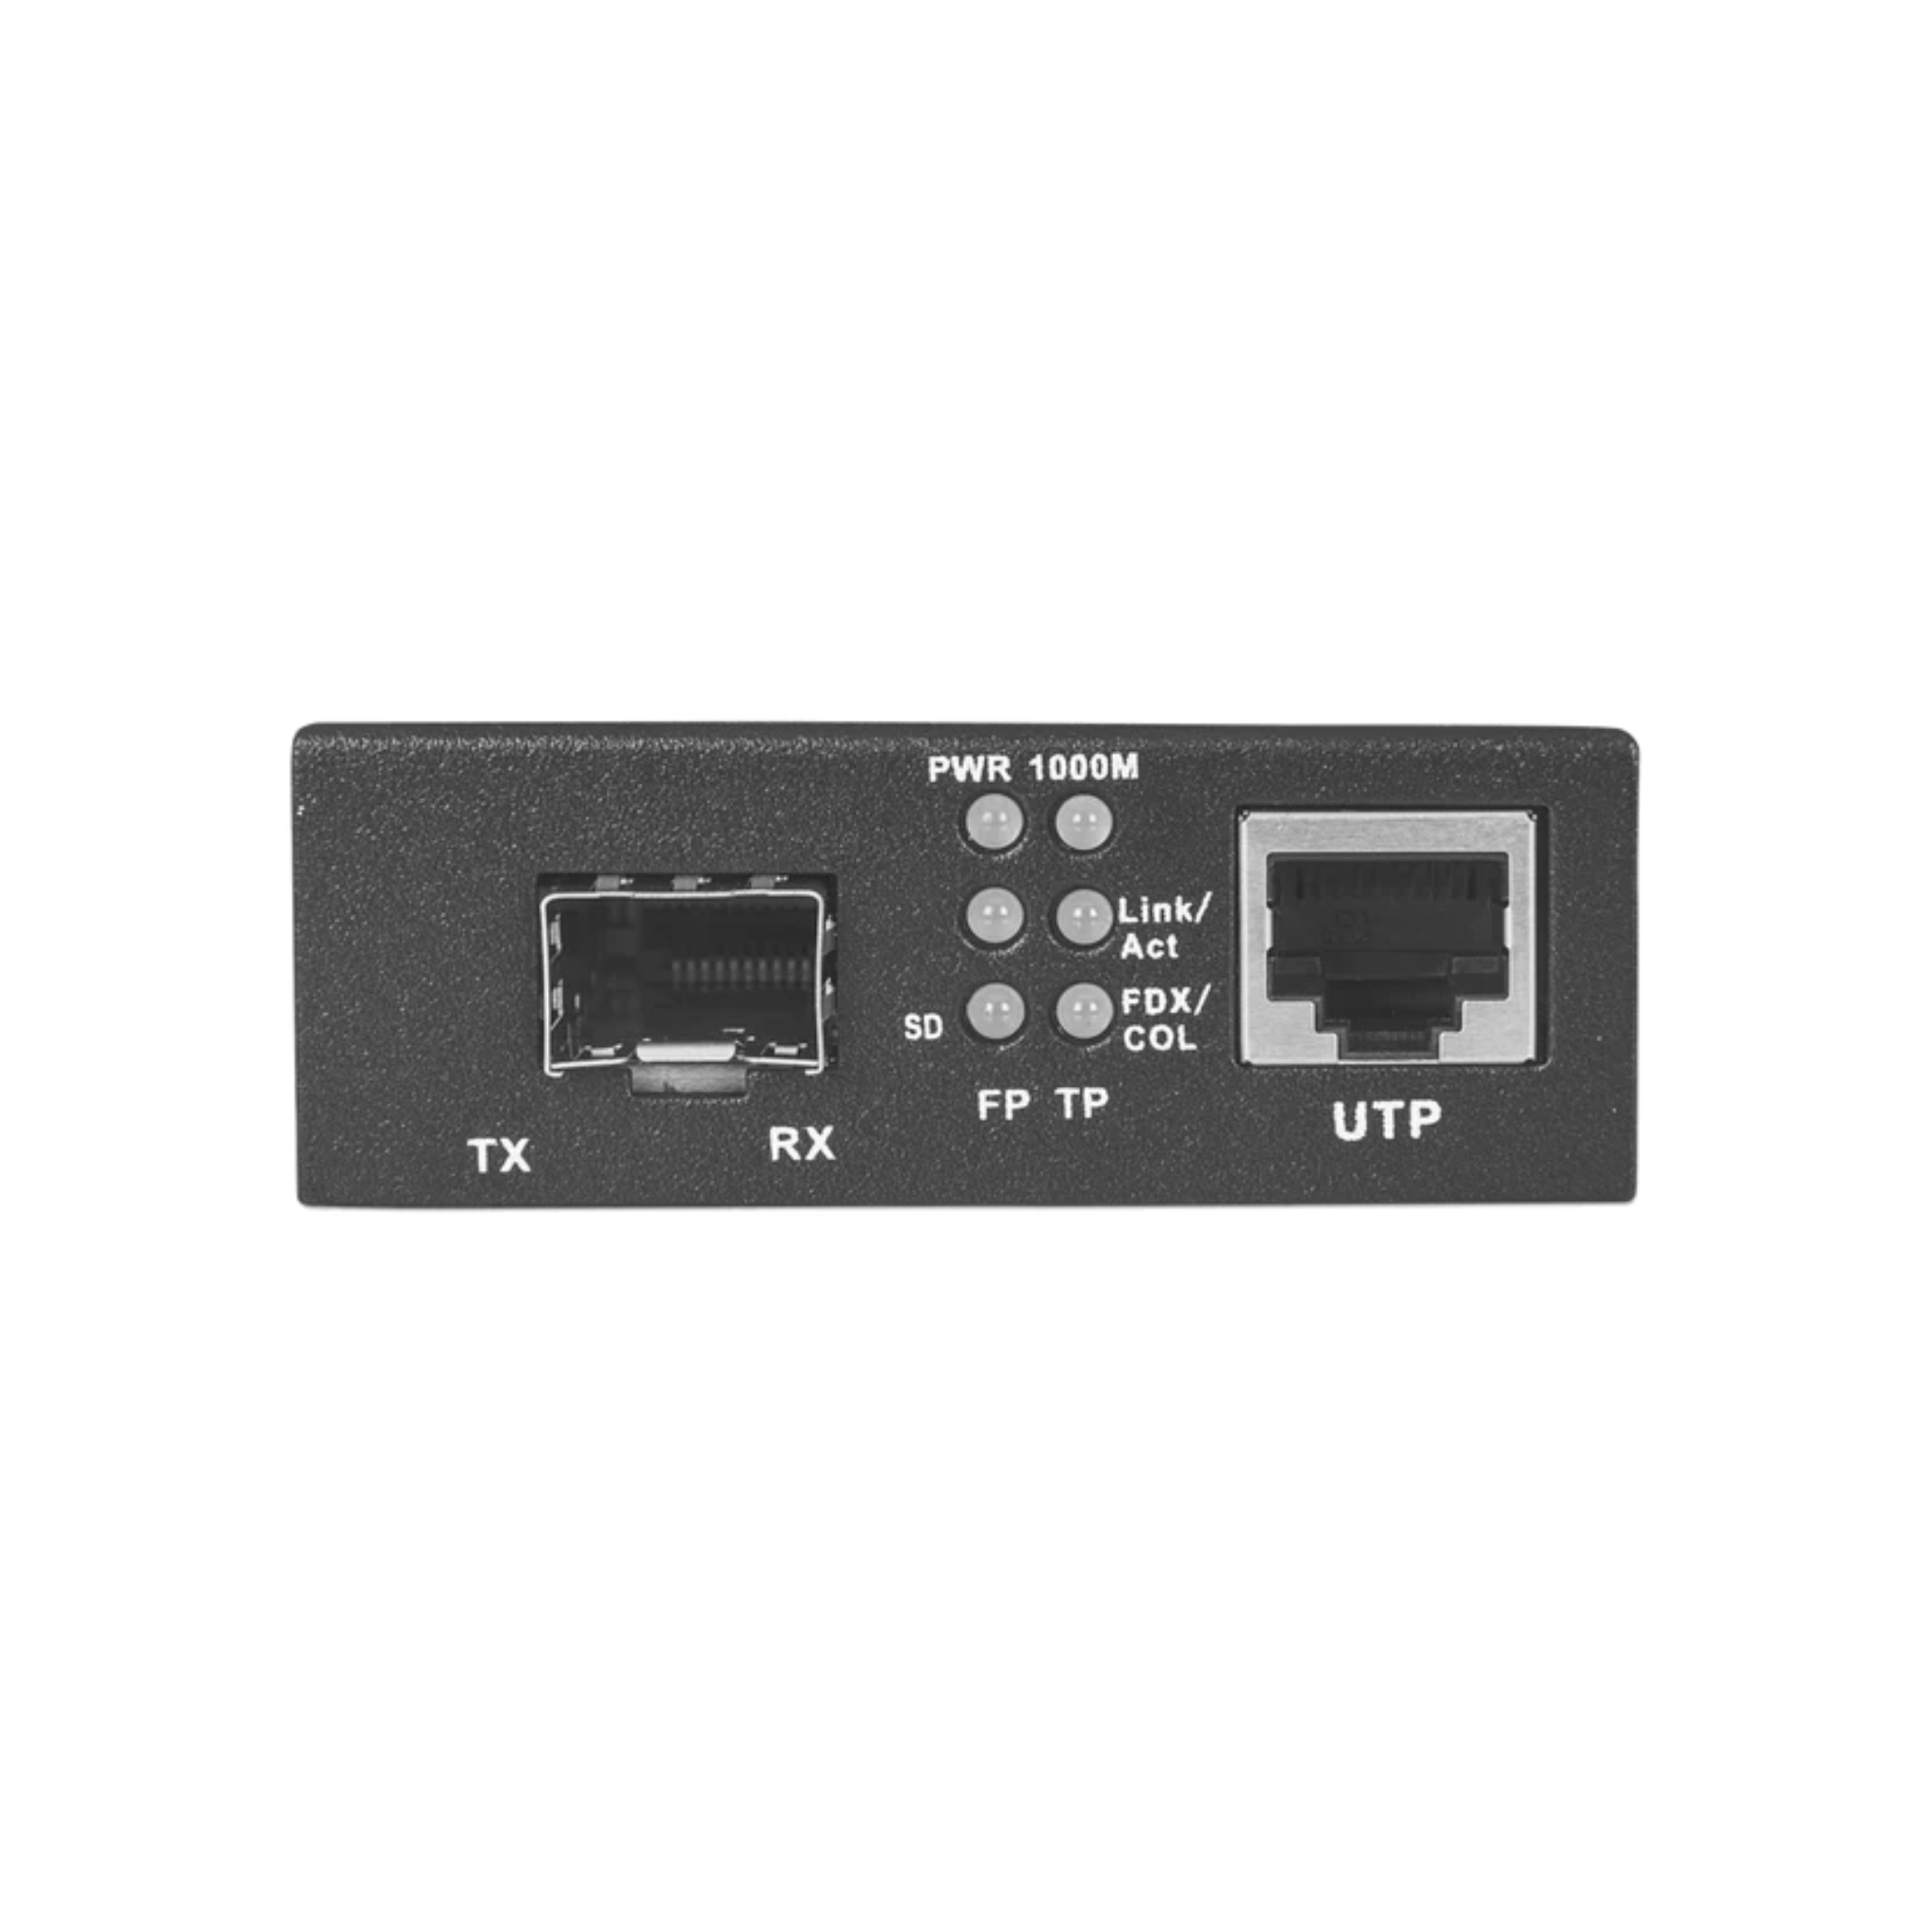 1G Ethernet Media Converter with 1 SFP Slot & 1 RJ45 Port